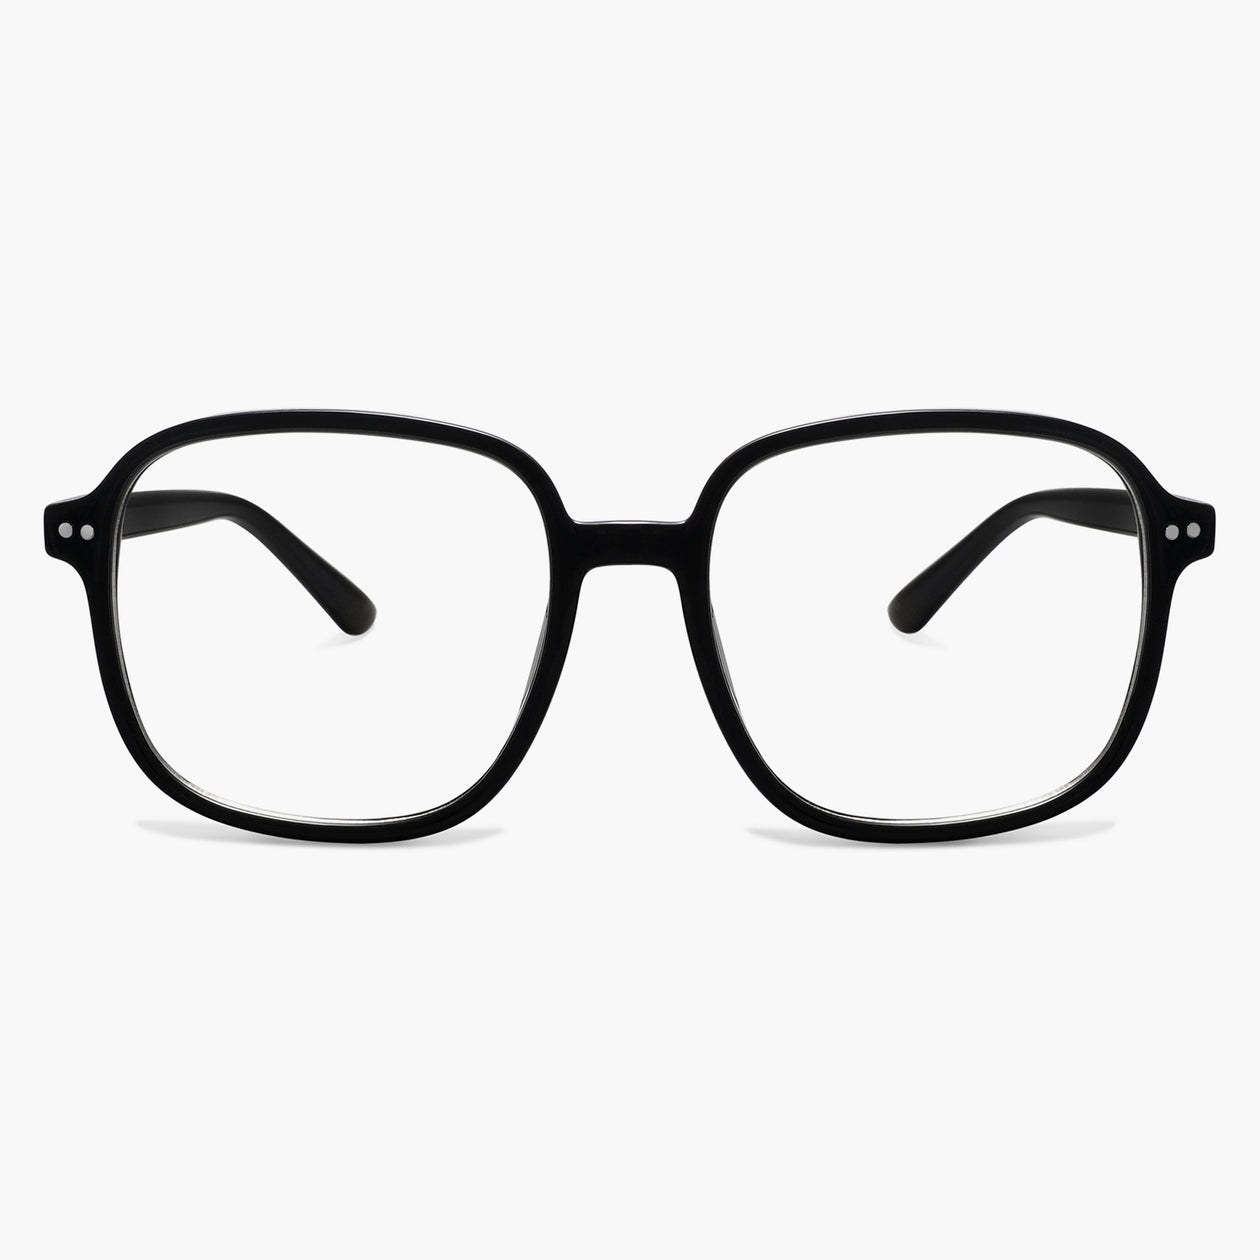 Comprar gafas redondas online